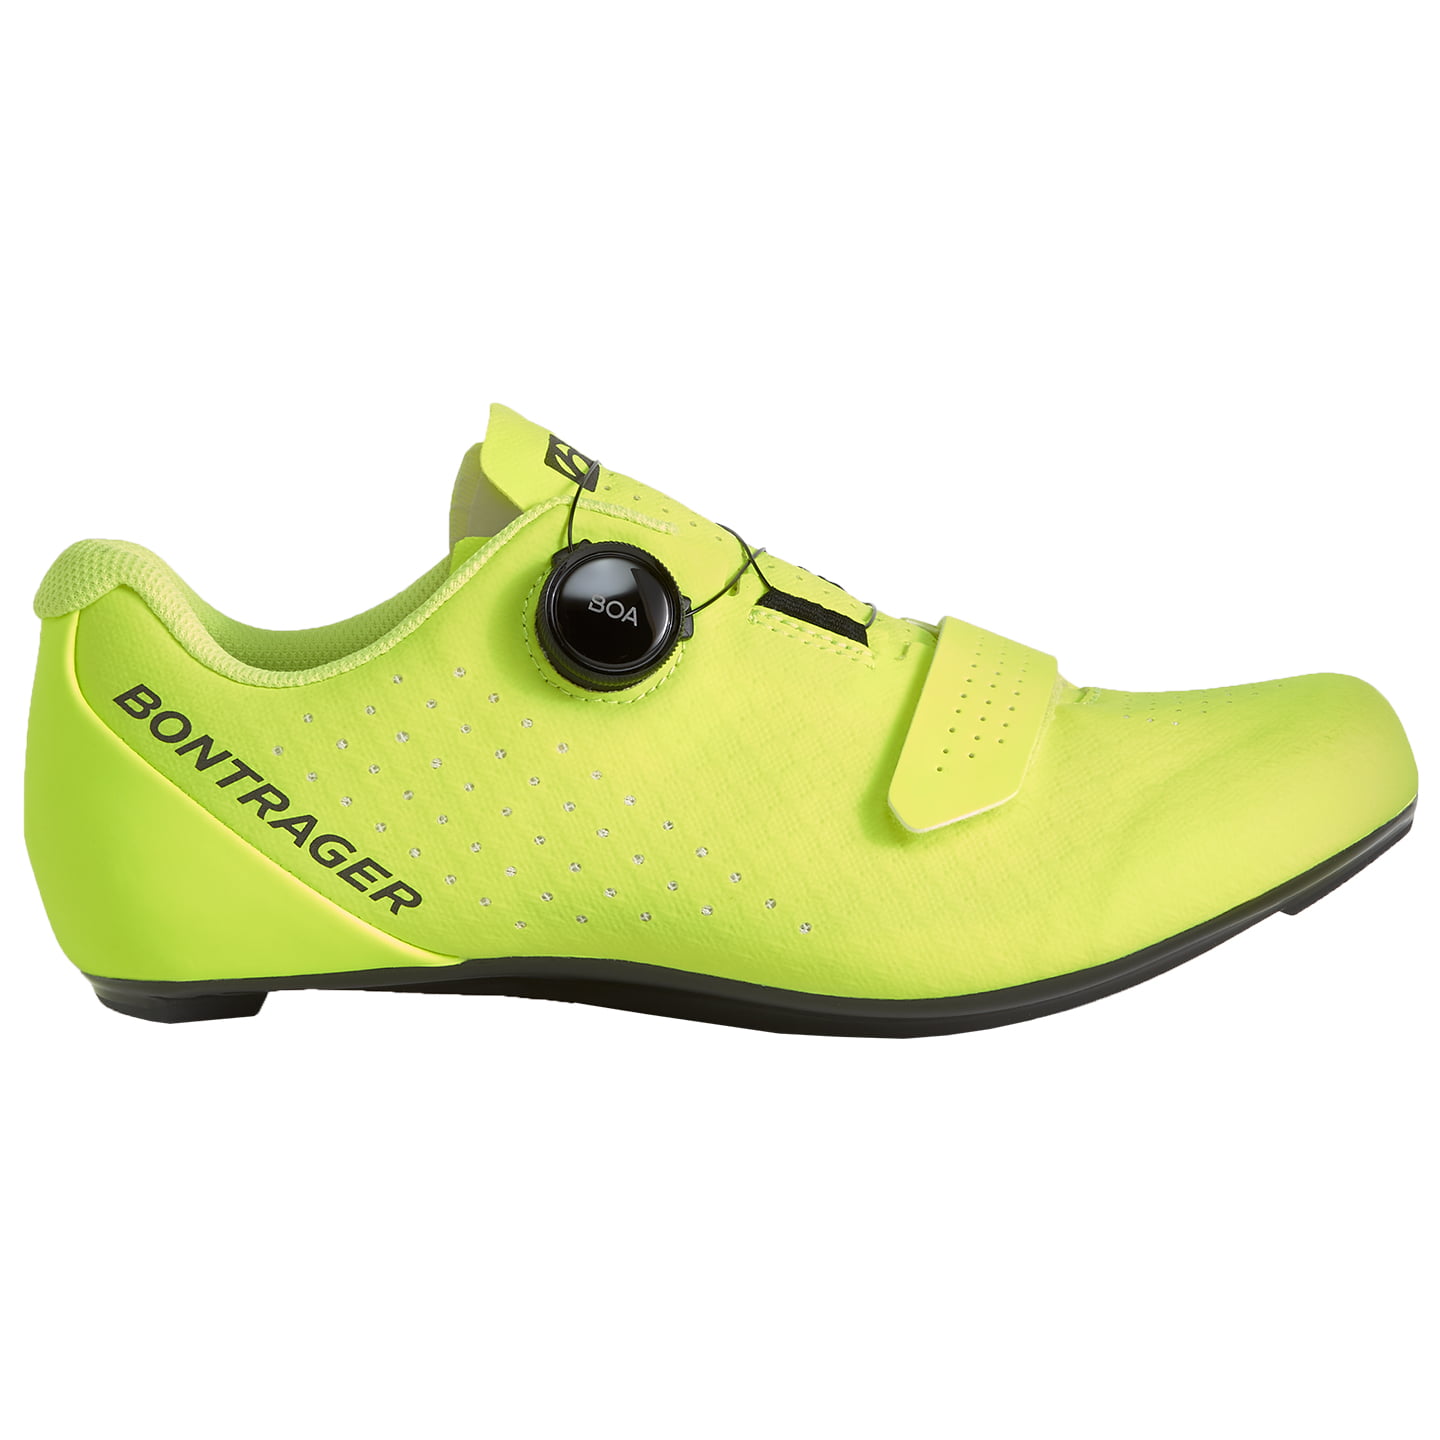 BONTRAGER Circuit Road Bike Shoes Road Shoes, for men, size 42, Cycling shoes